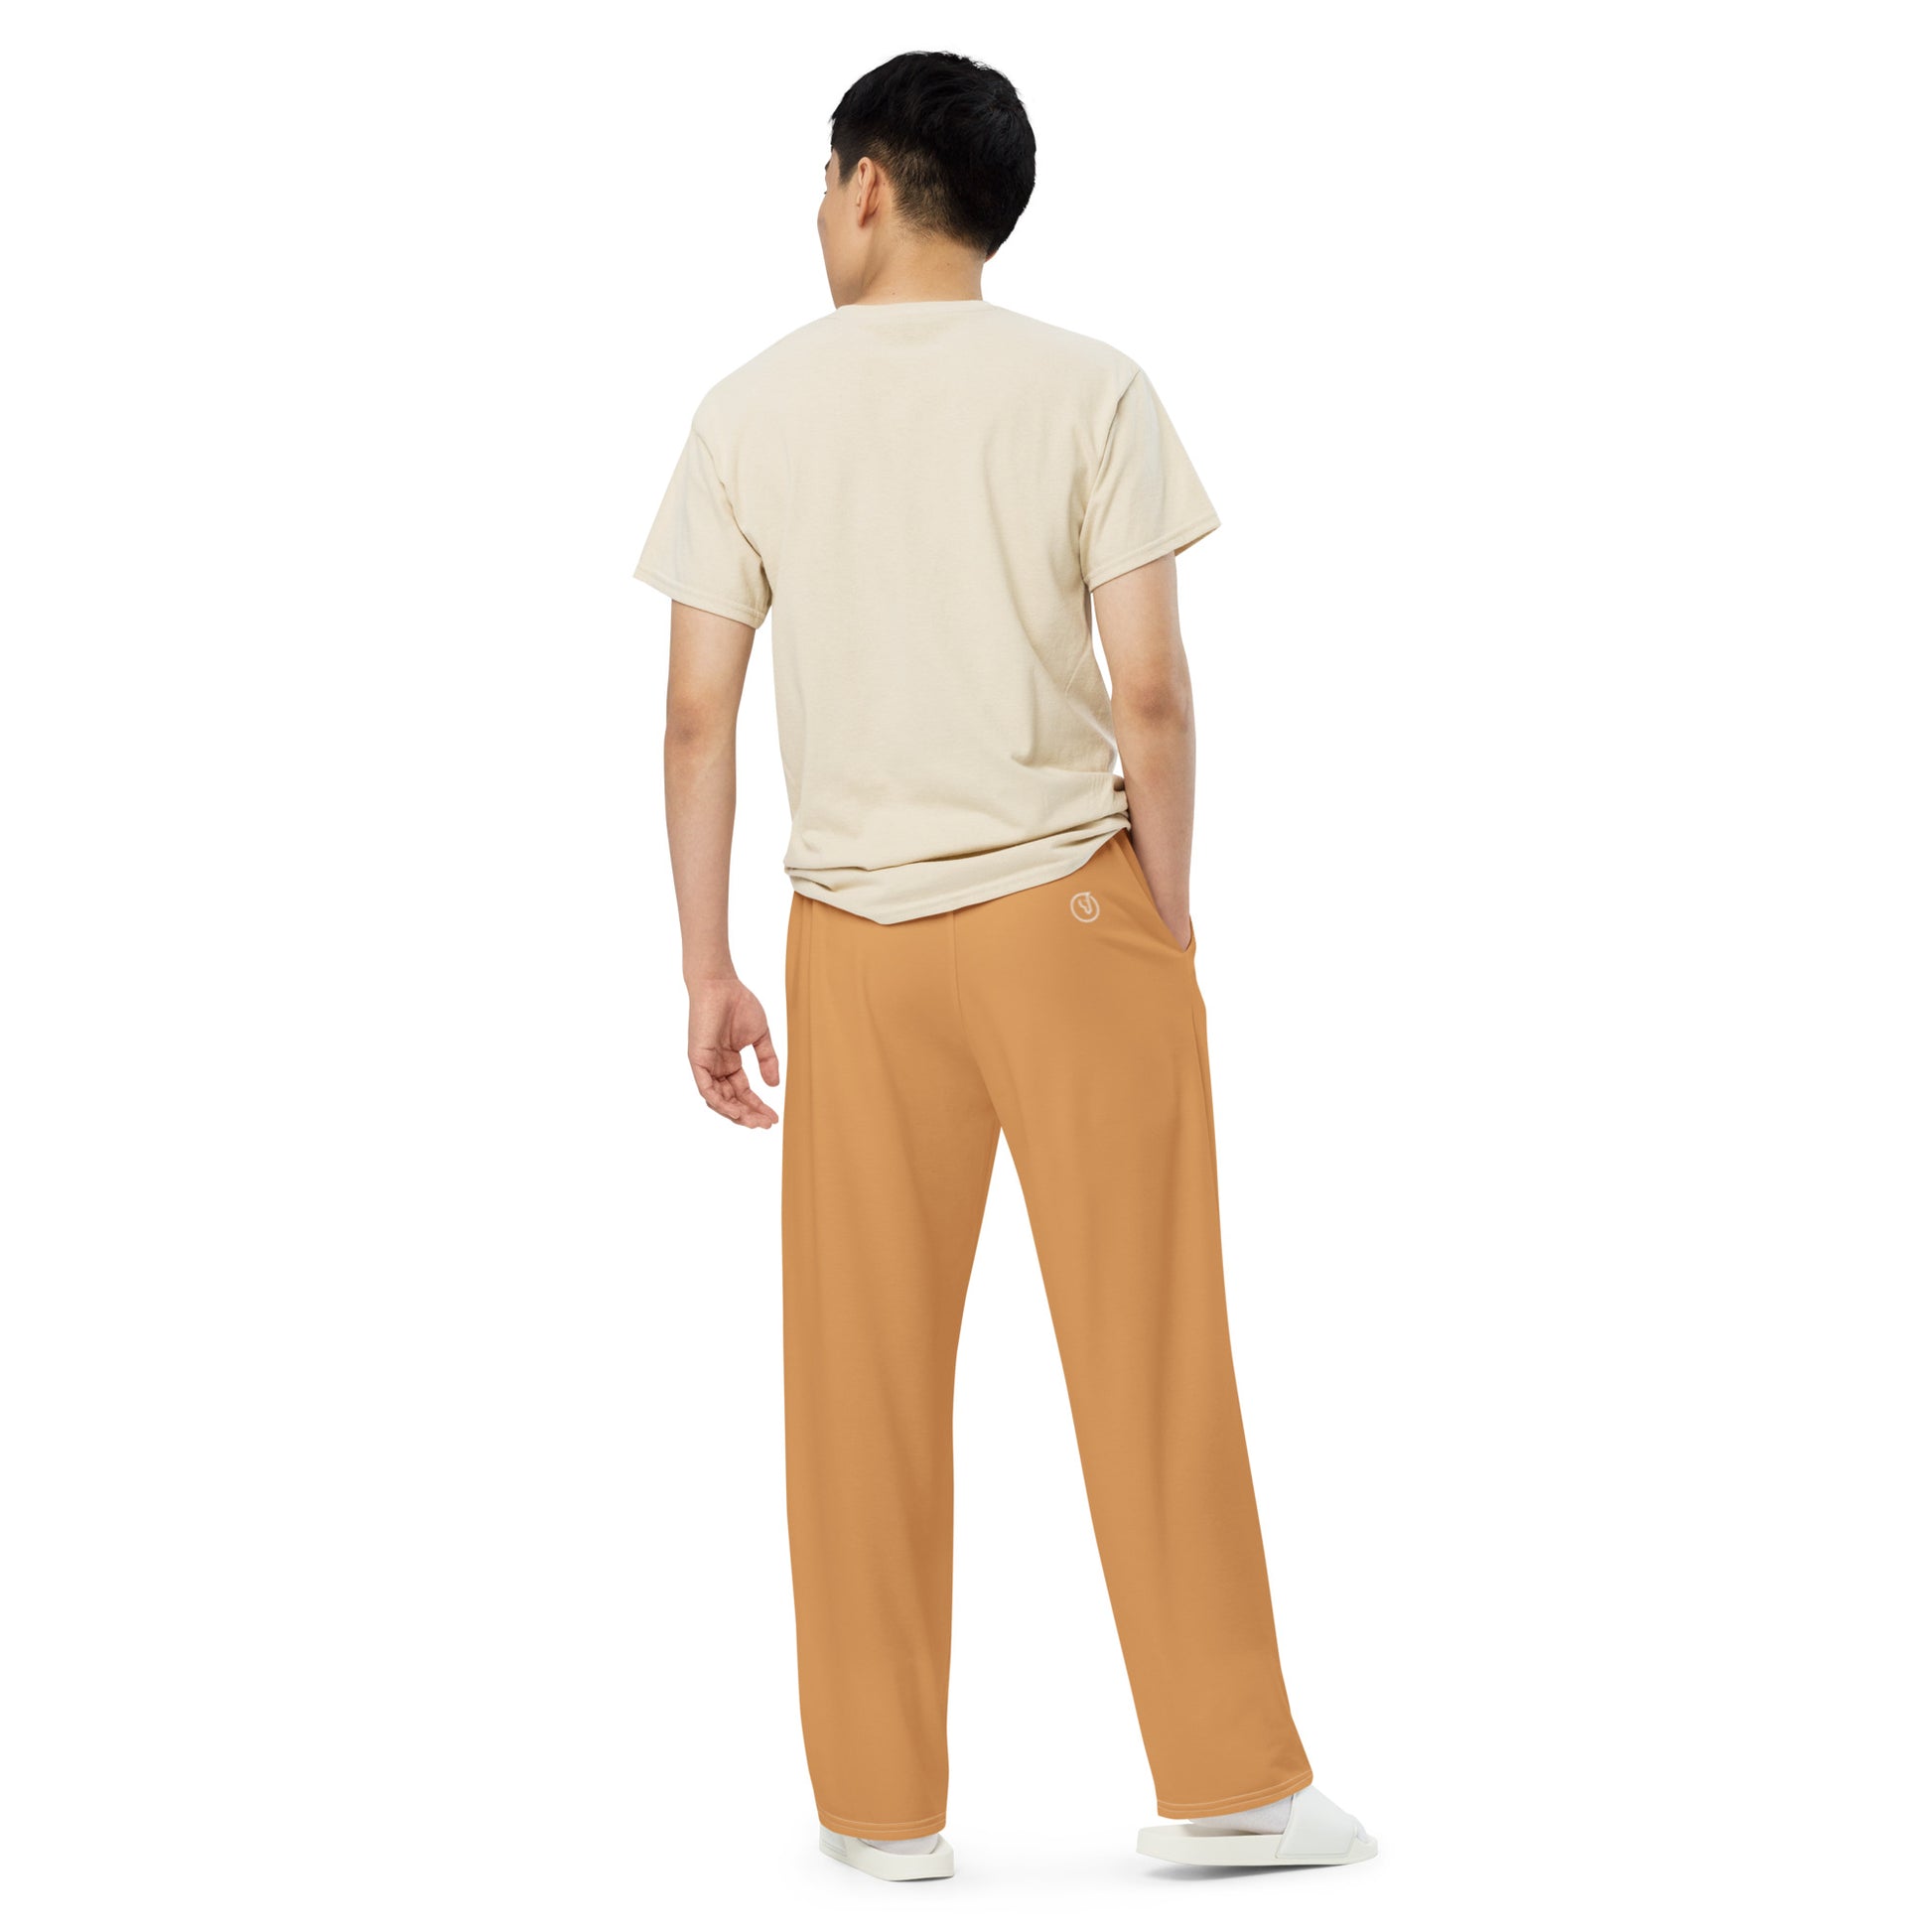 Humble Sportswear, men's color match pants, men's wide-leg loungewear pants 